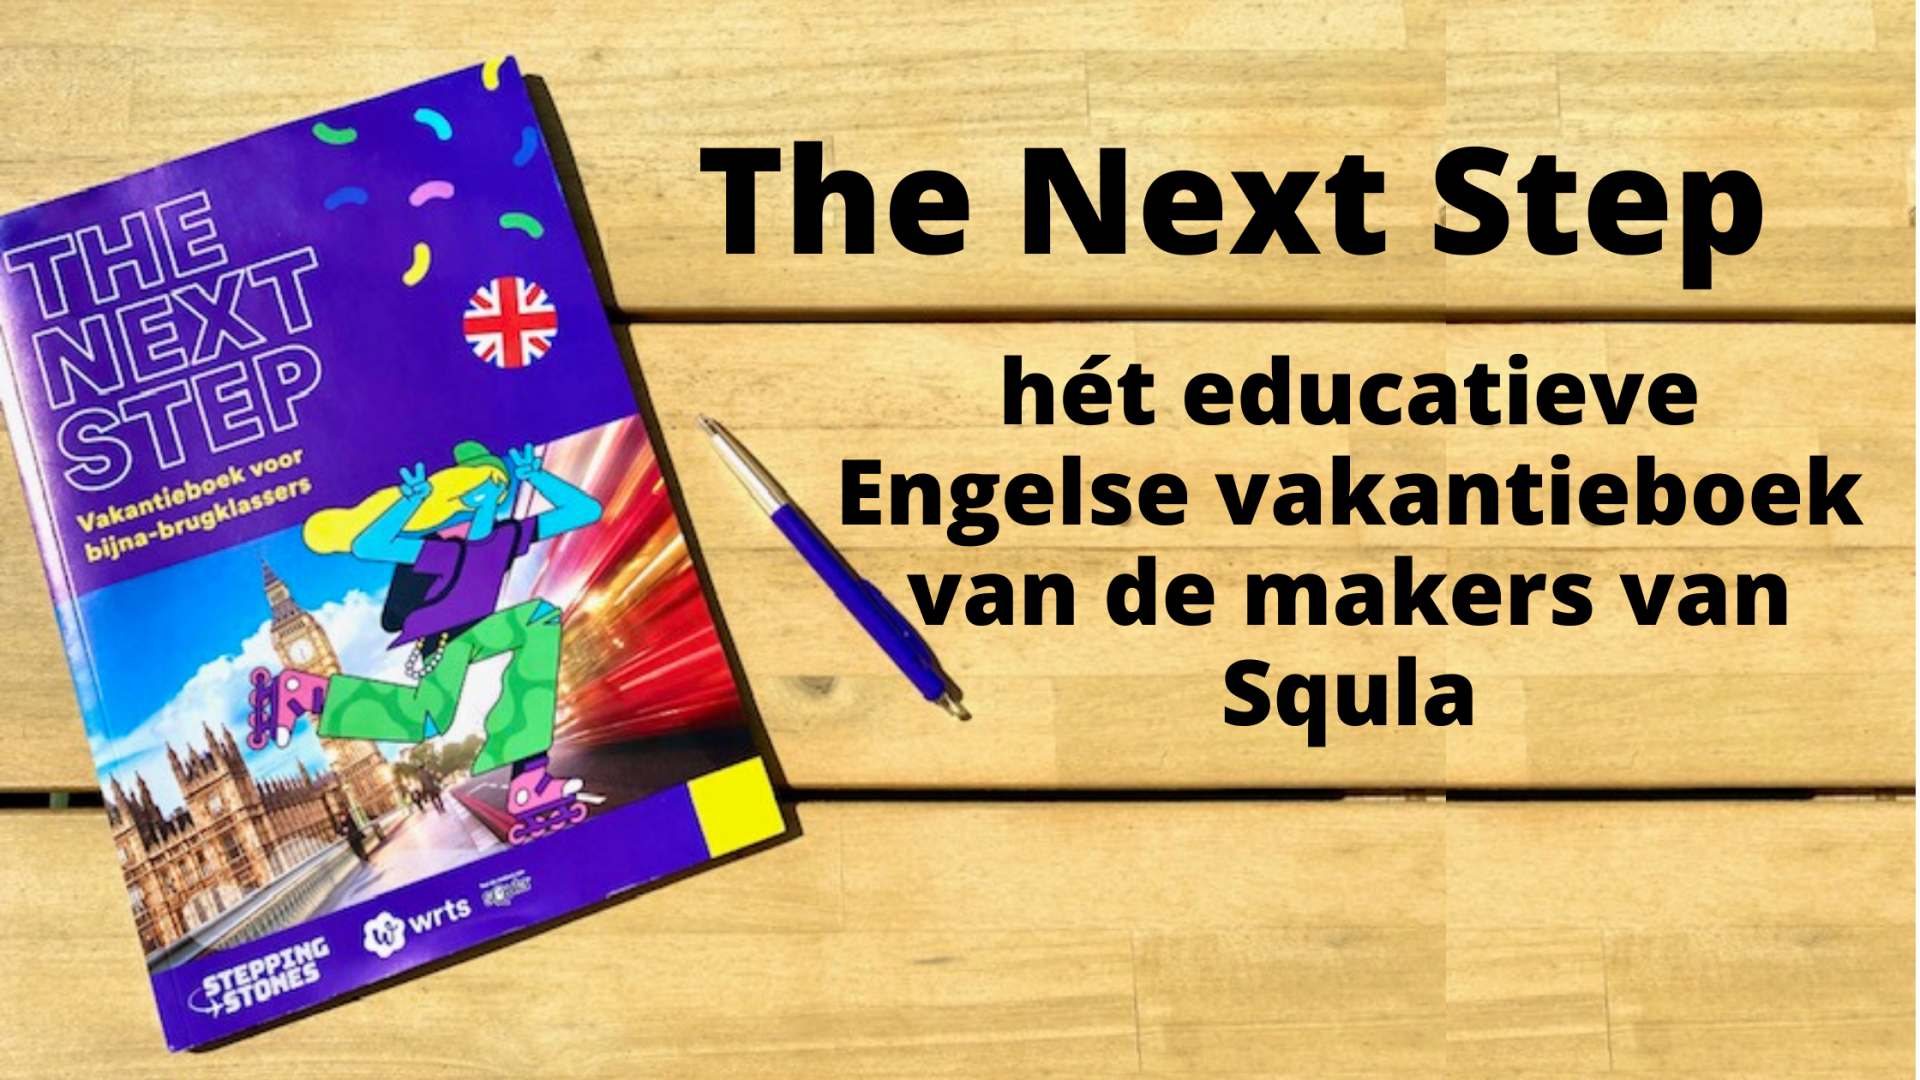 The Next Step - hét educatieve Engelse vakantieboek